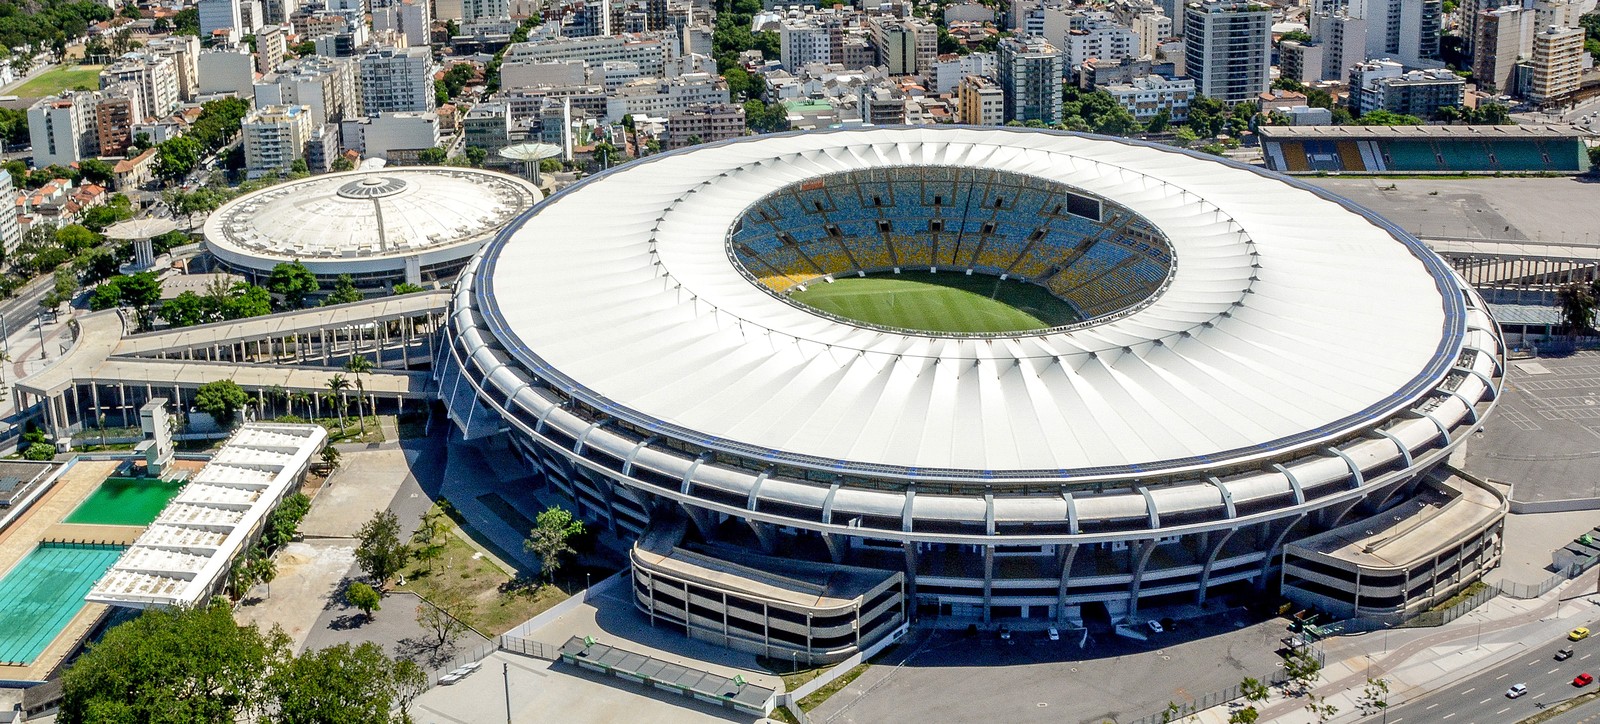 Estadio Maracana - Jornalista Mario Filho or Rei Pele?